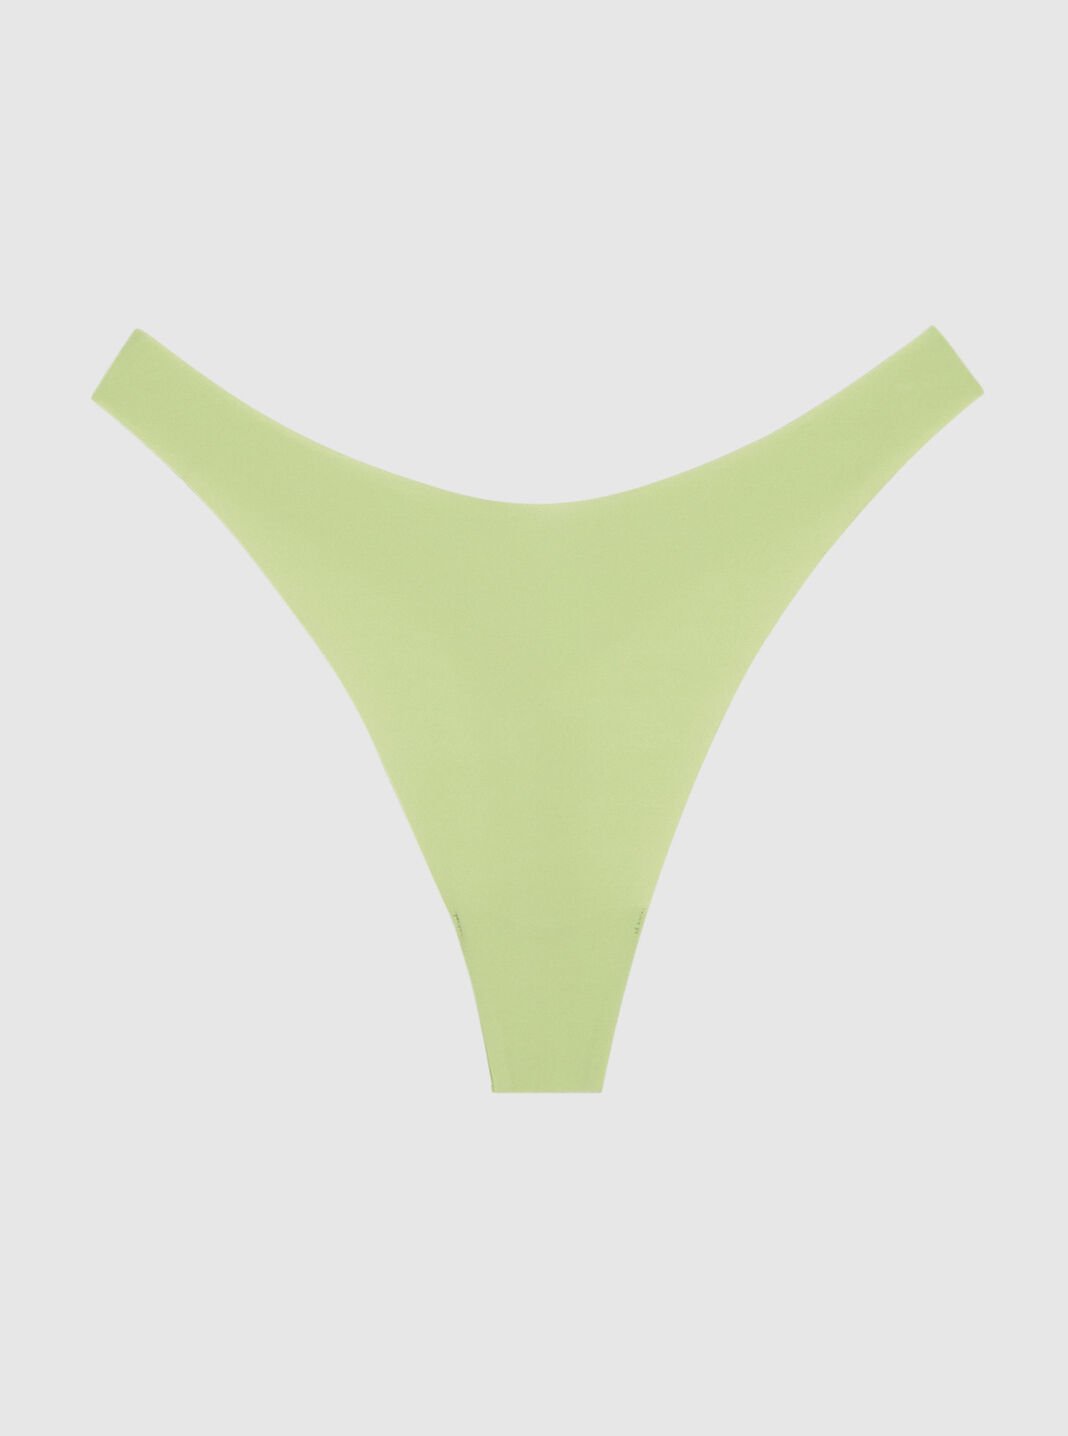 B91xZ Women's Cotton Underwear Microfiber Smooth Stretch Brief Panty,Green L